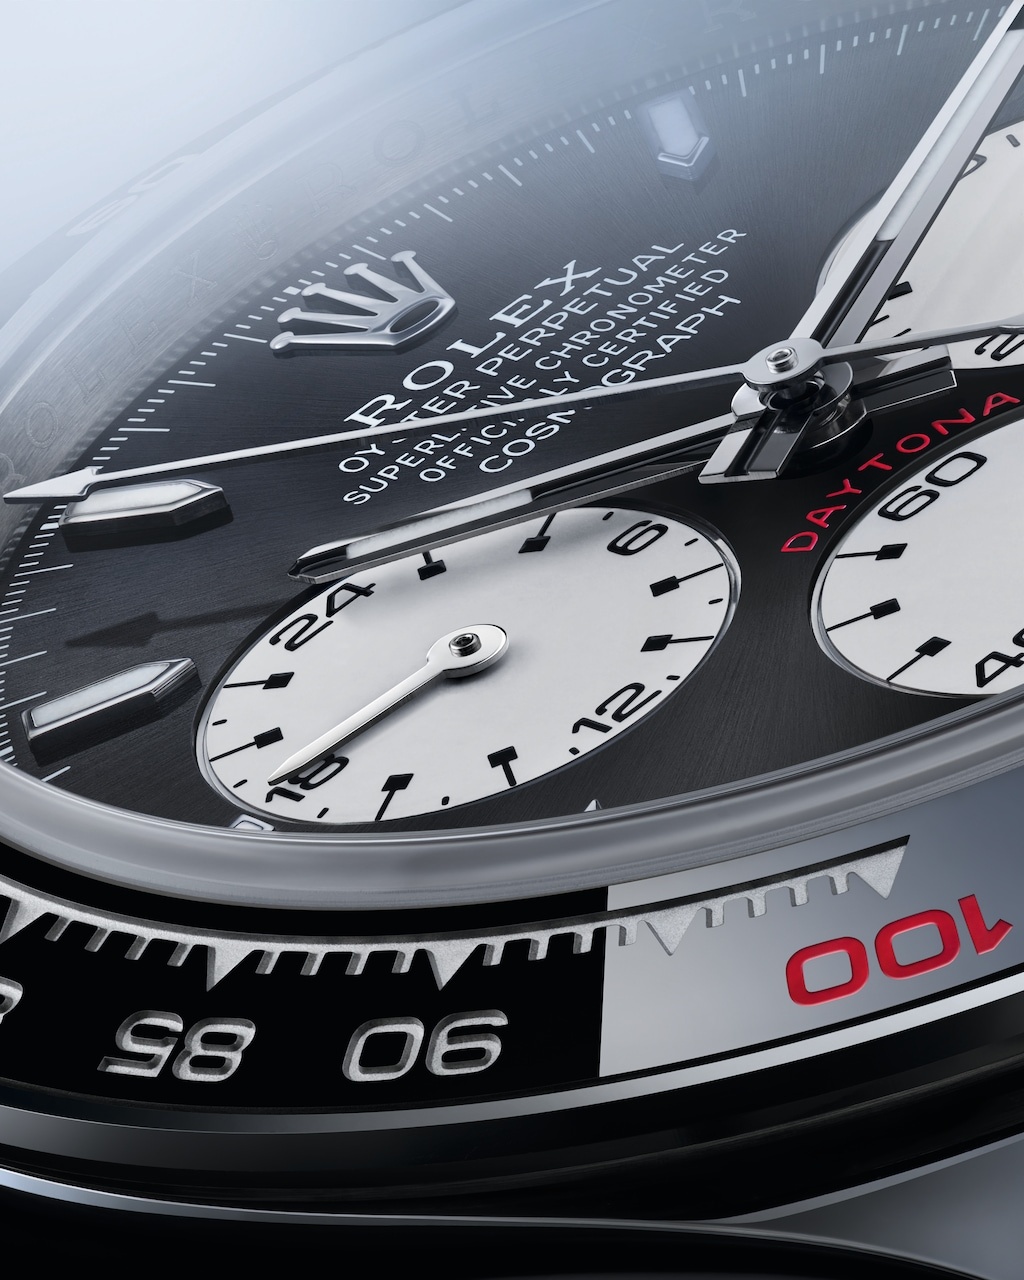 Часы Rolex Oyster Perpetual Cosmograph Daytona (Ref. 126529LN)